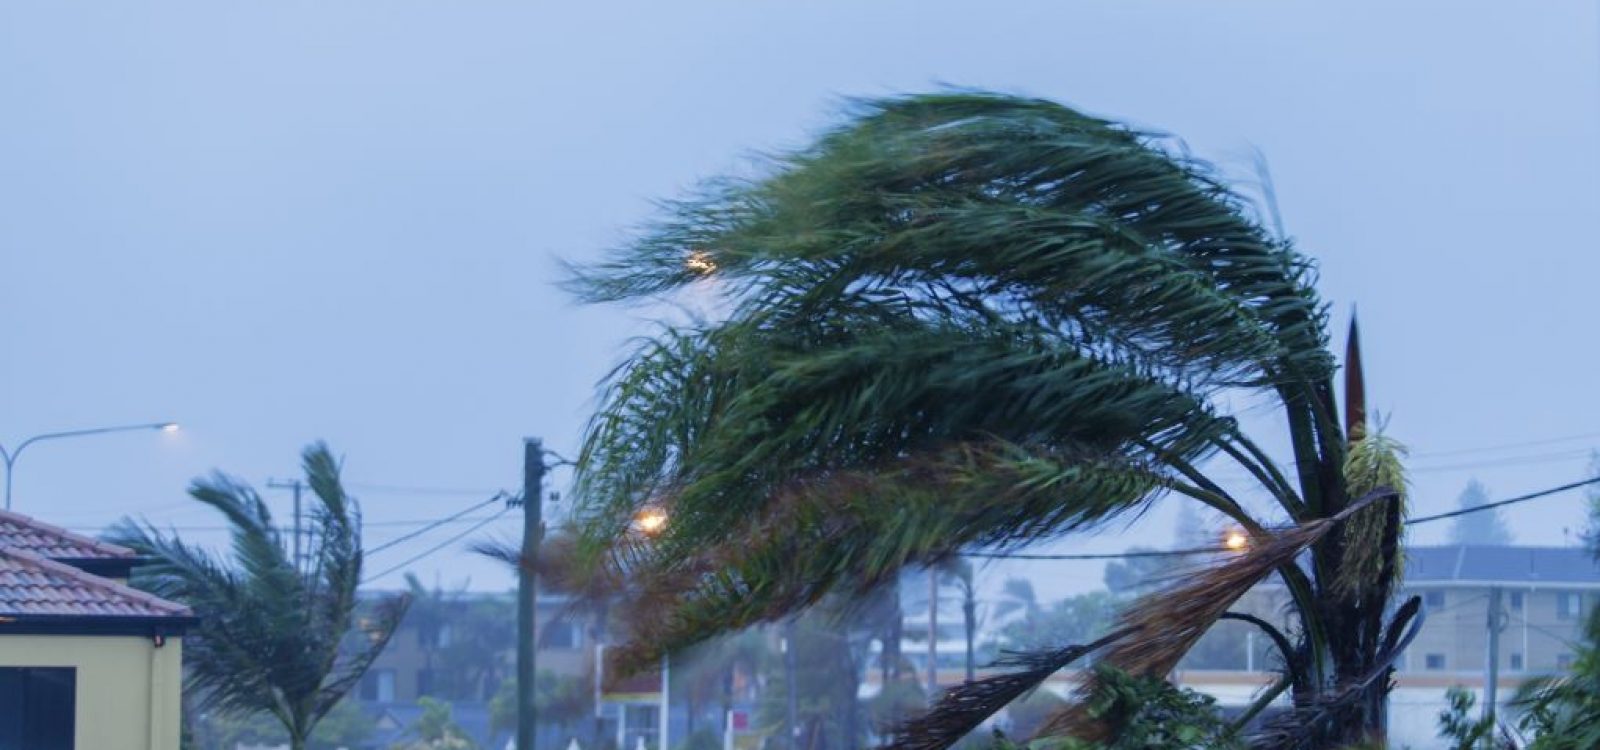 What costs more: a windstorm or a market crash?